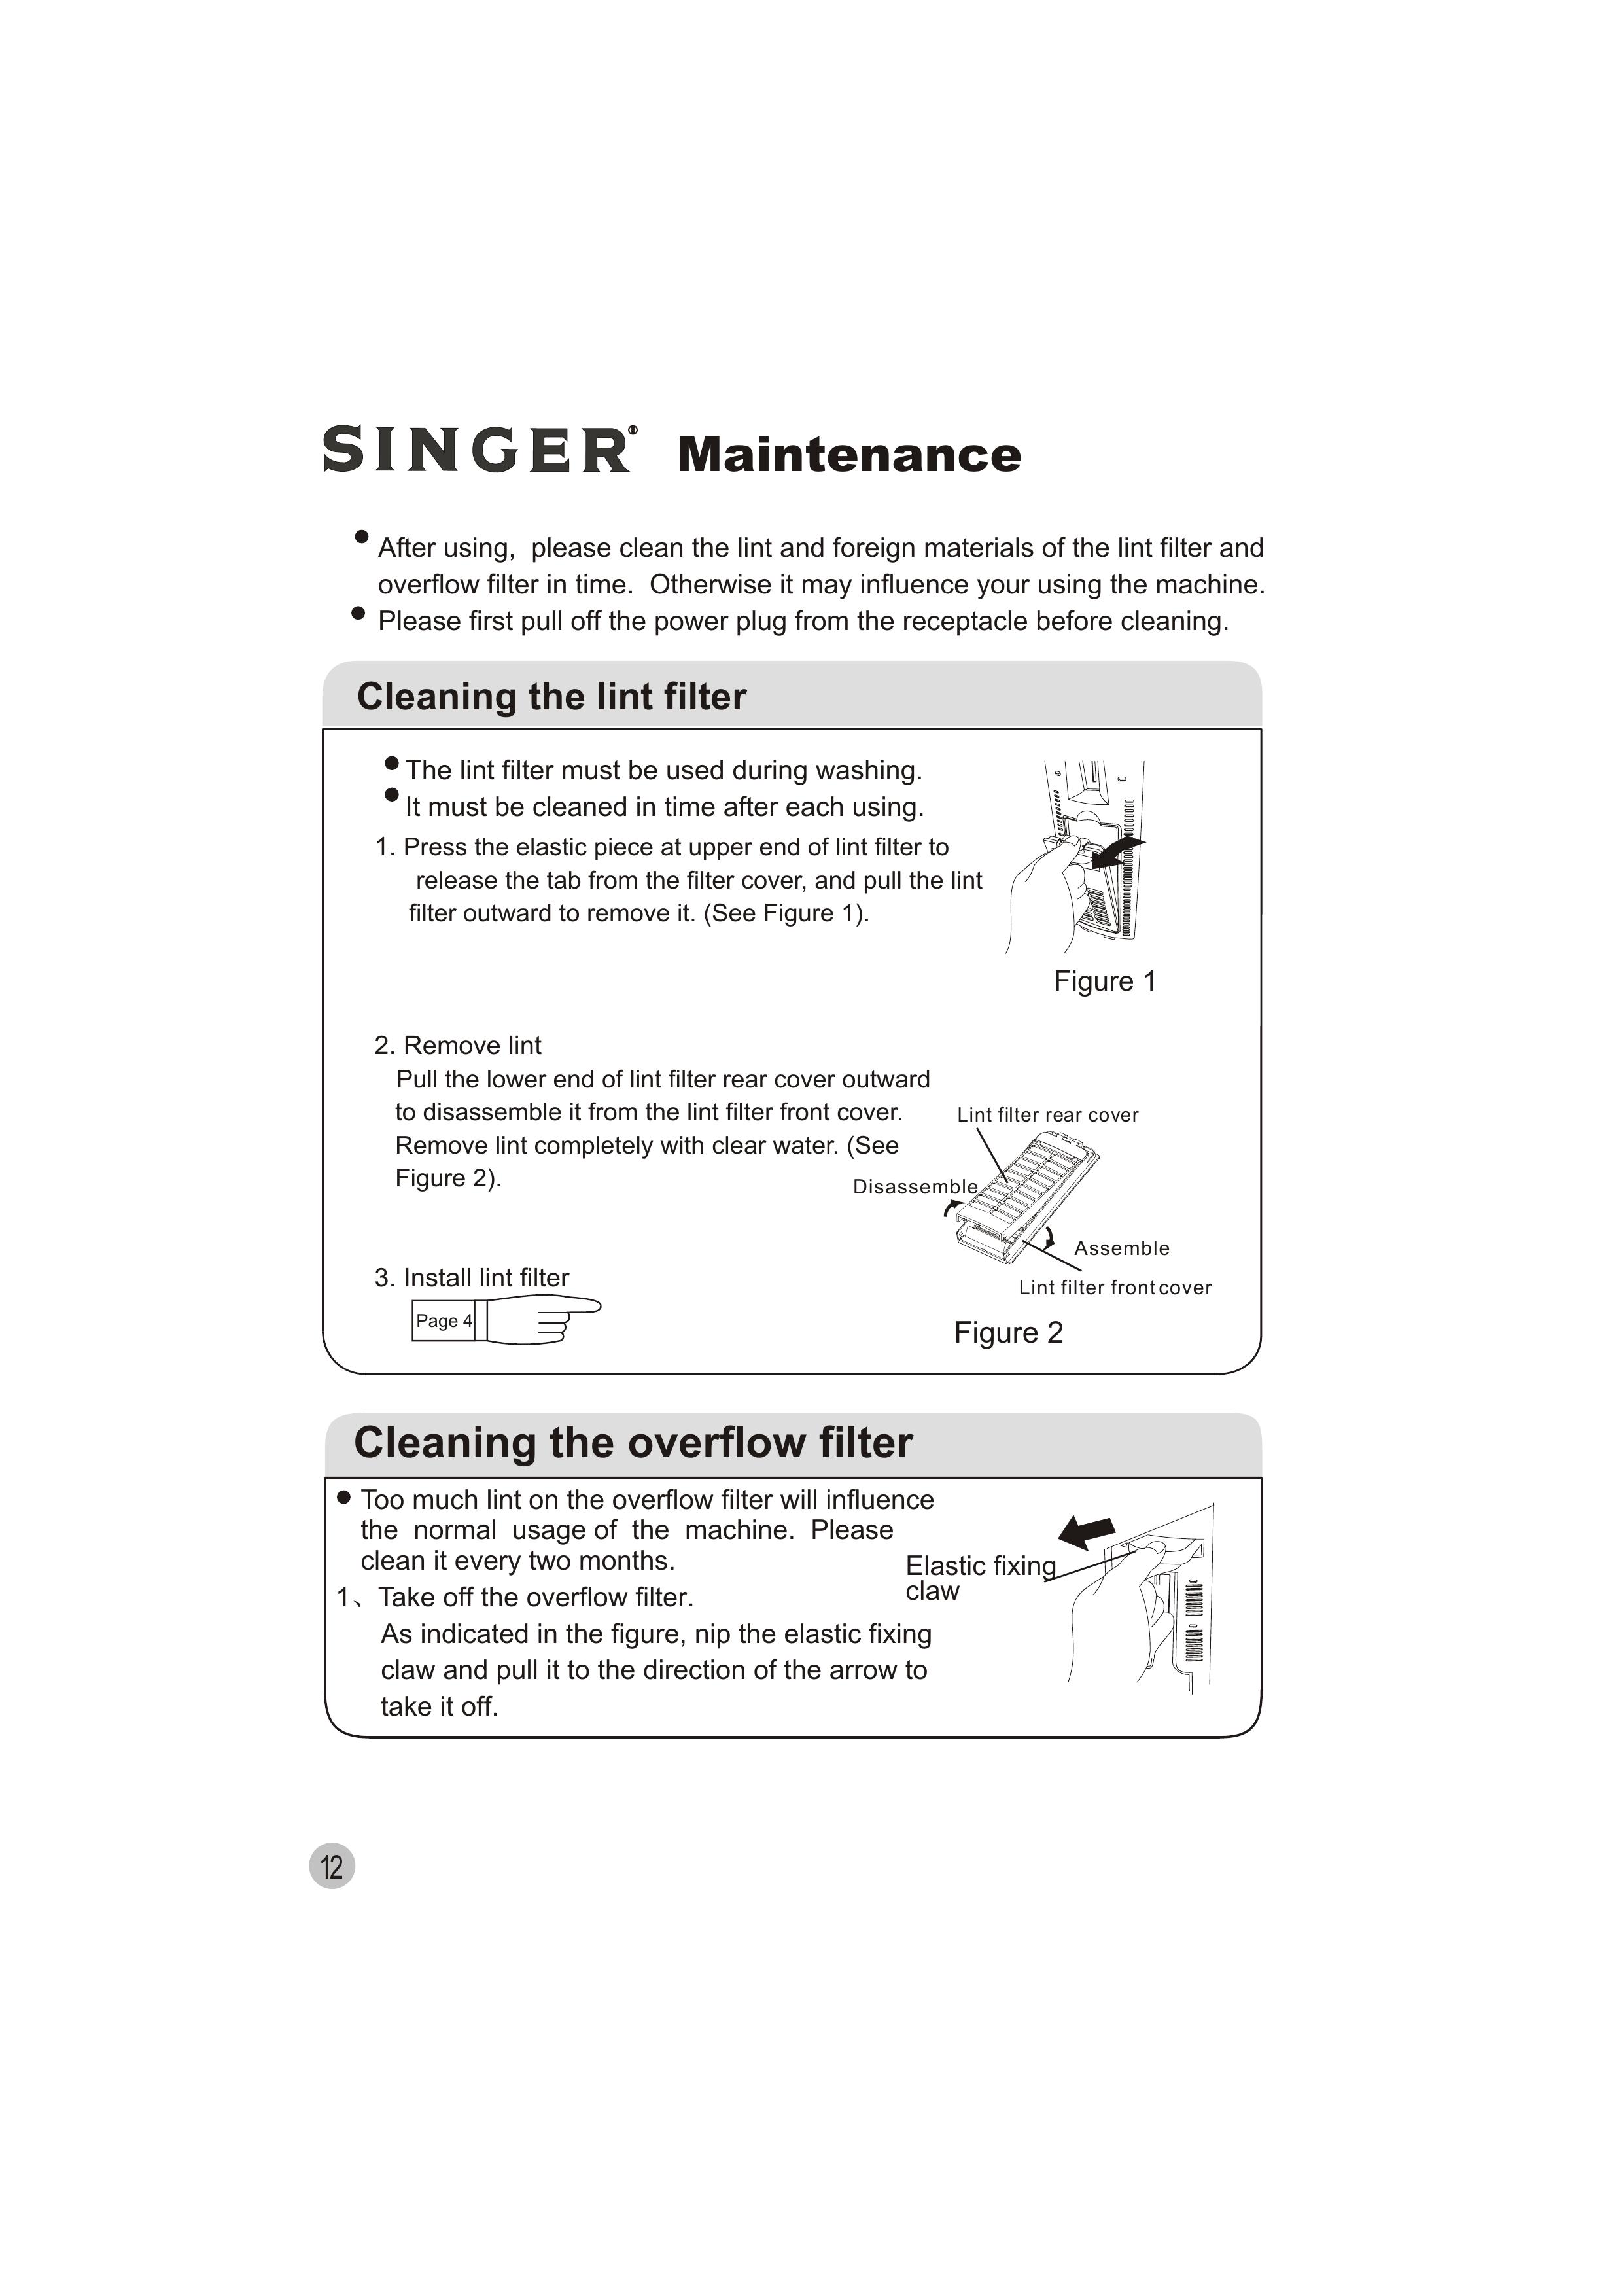 Singer WT5113 Washer/Dryer User Manual (Page 13)